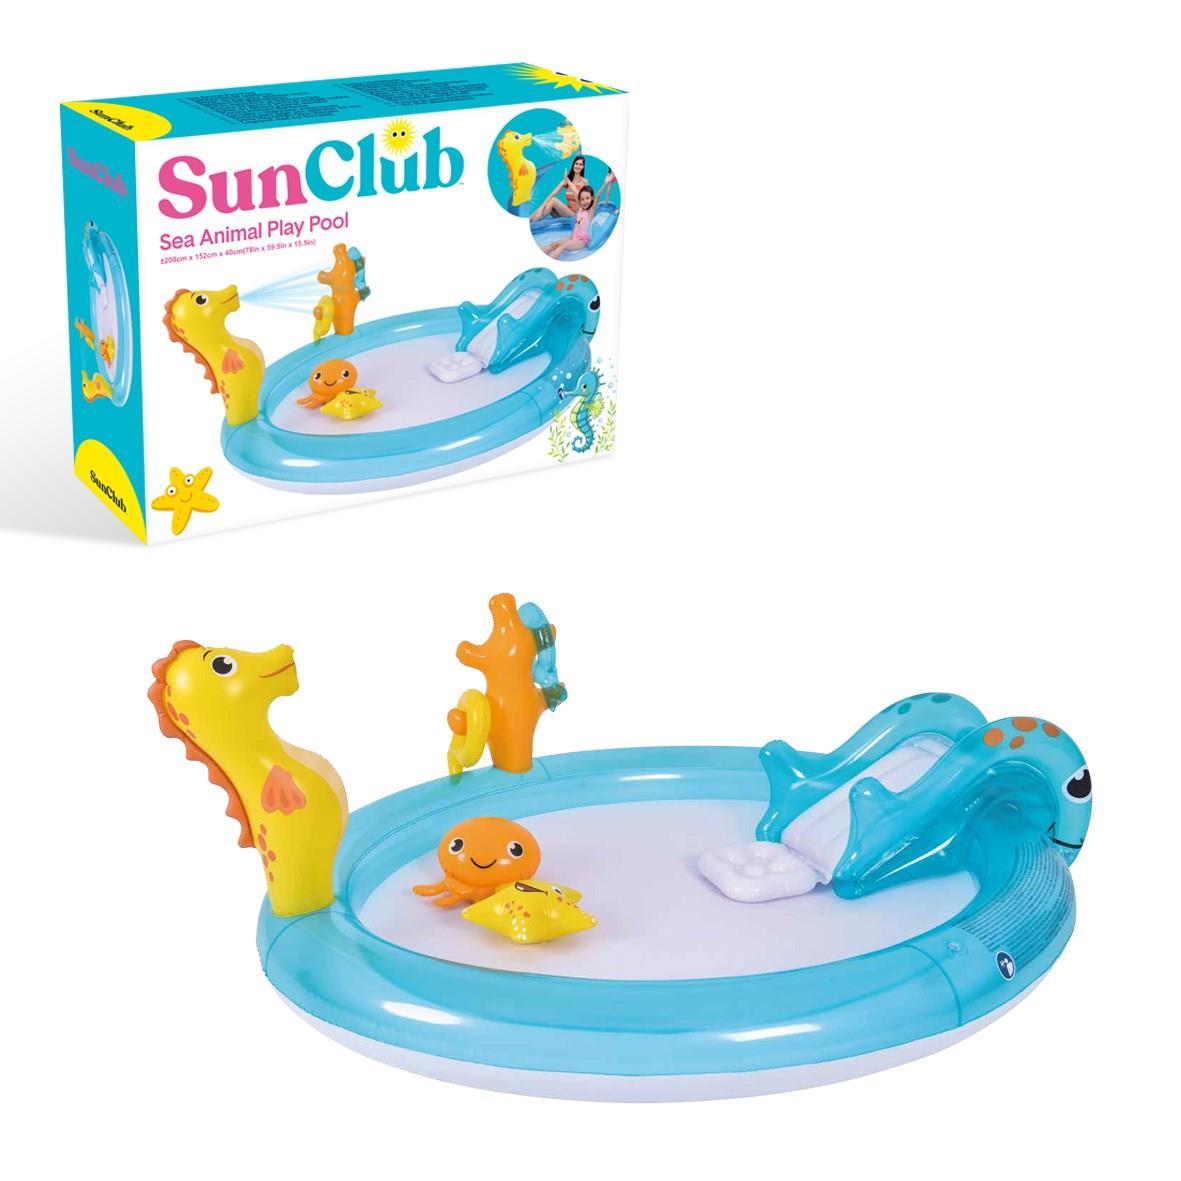 Sun Club 2M Sea Animal Play Pool with Water Spray